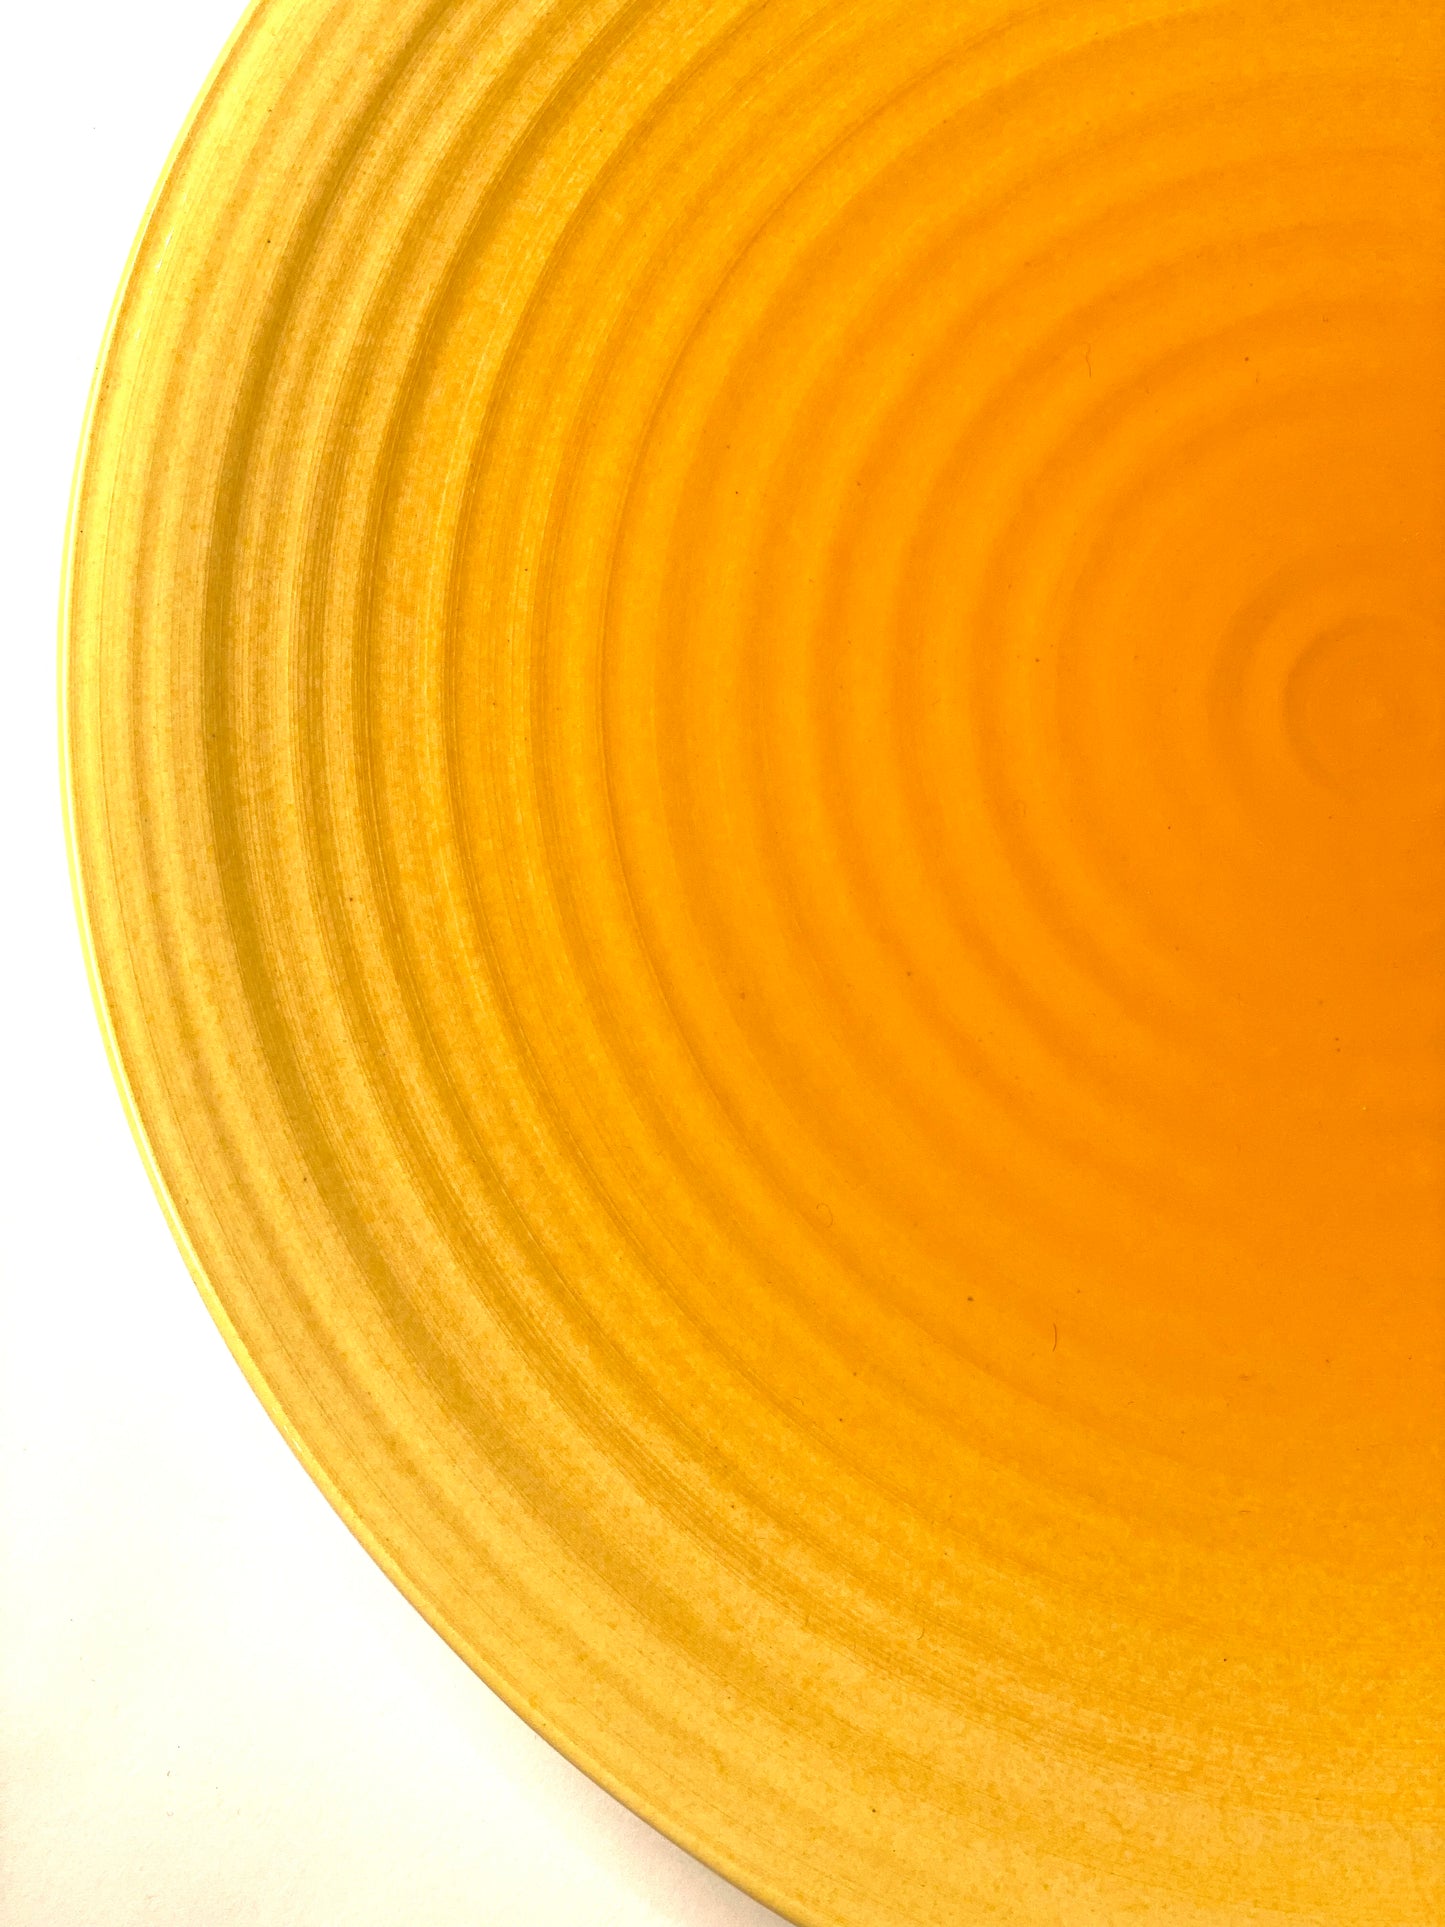 Yellow Radial Platter